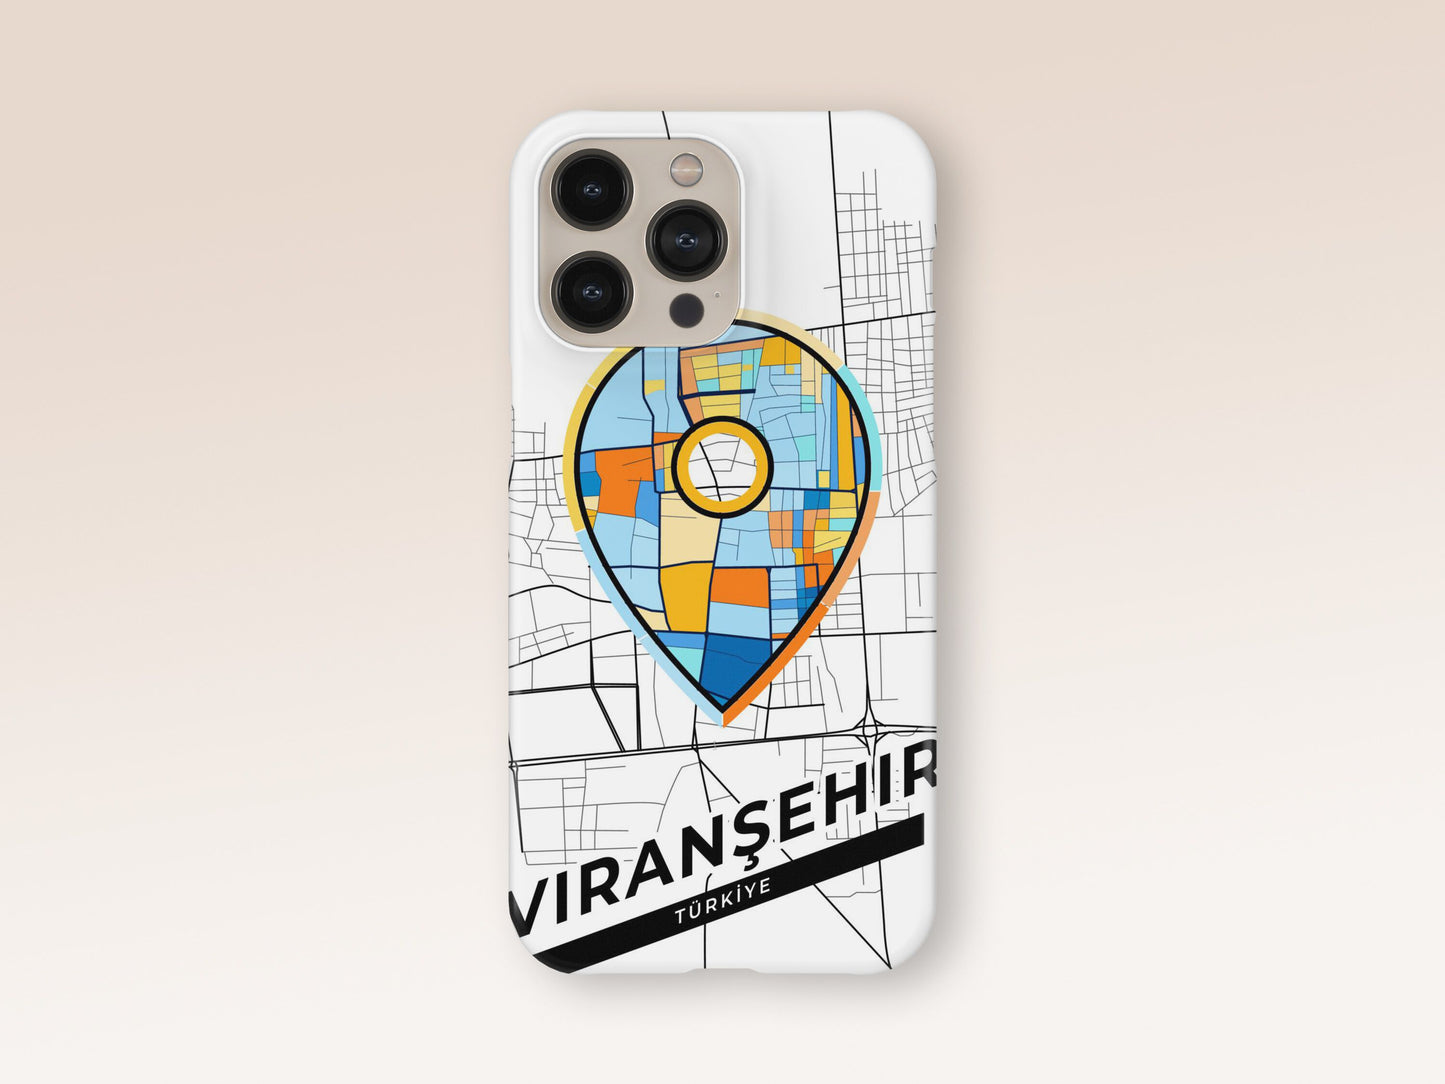 Viranşehir Turkey slim phone case with colorful icon 1